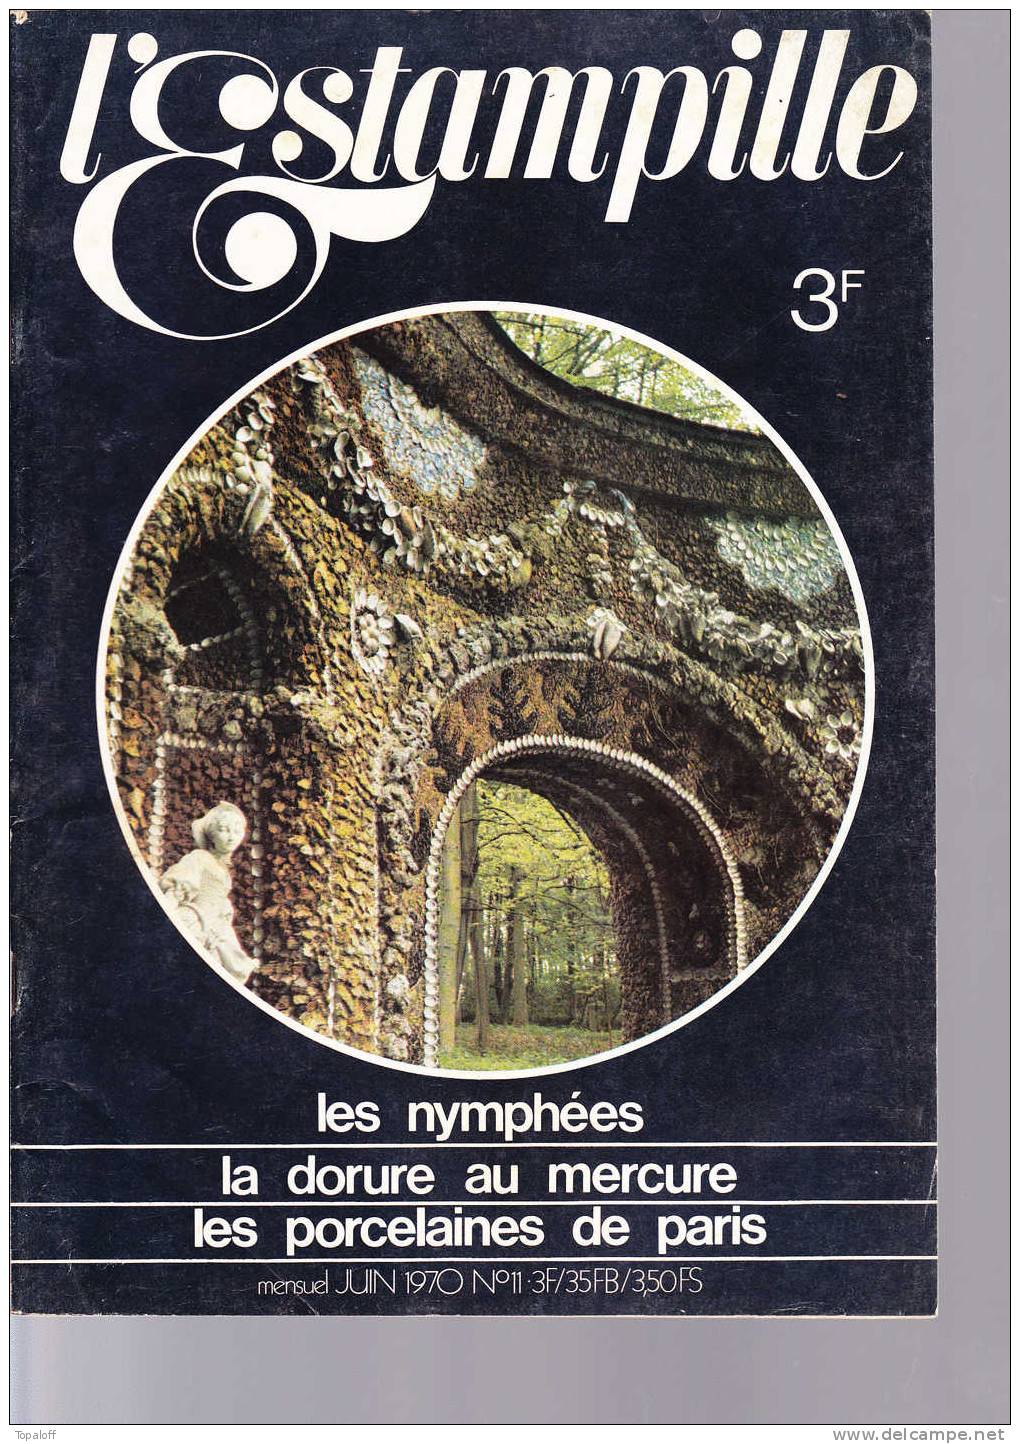 L'ESTAMPILLE N°11 Juin 1970     64 Pages  Porcelaine  Ceintures - Brocantes & Collections